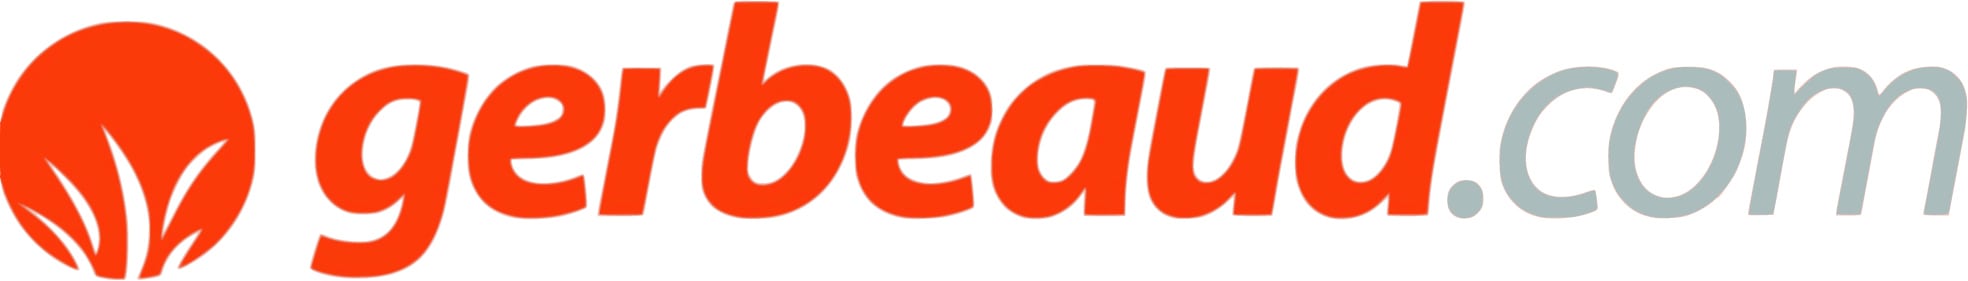 logo gerbeaud